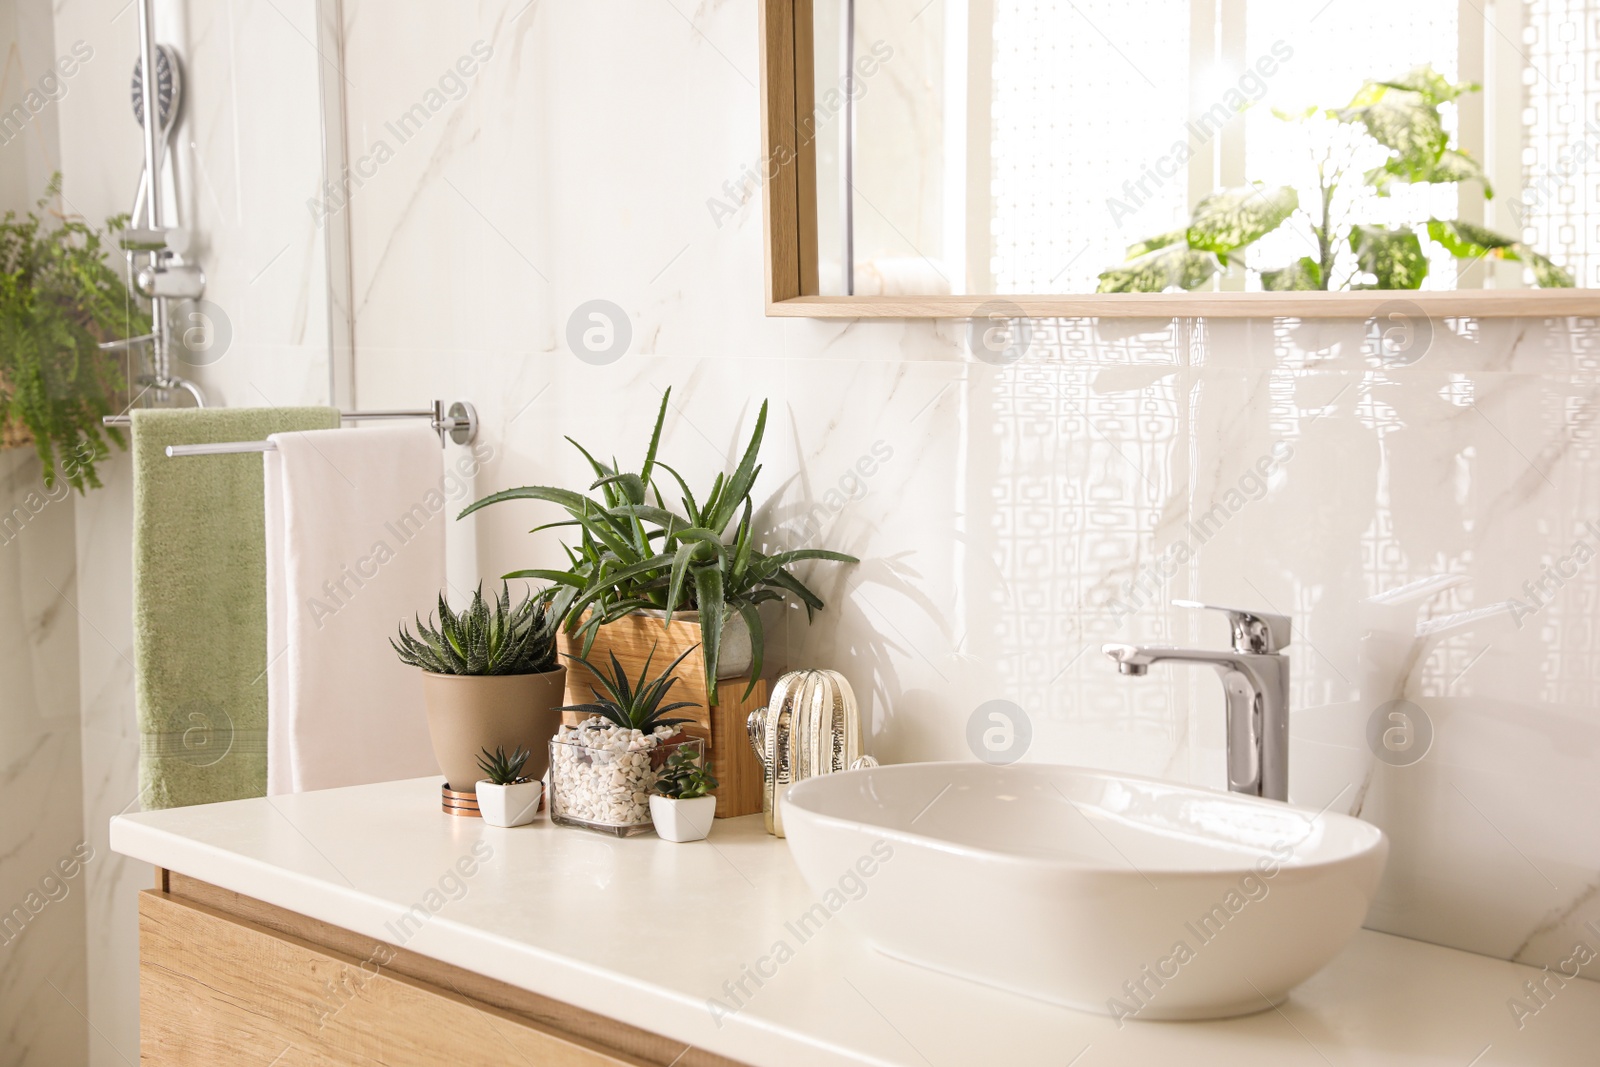 Photo of Stylish bathroom interior with countertop, mirror and houseplants. Design idea